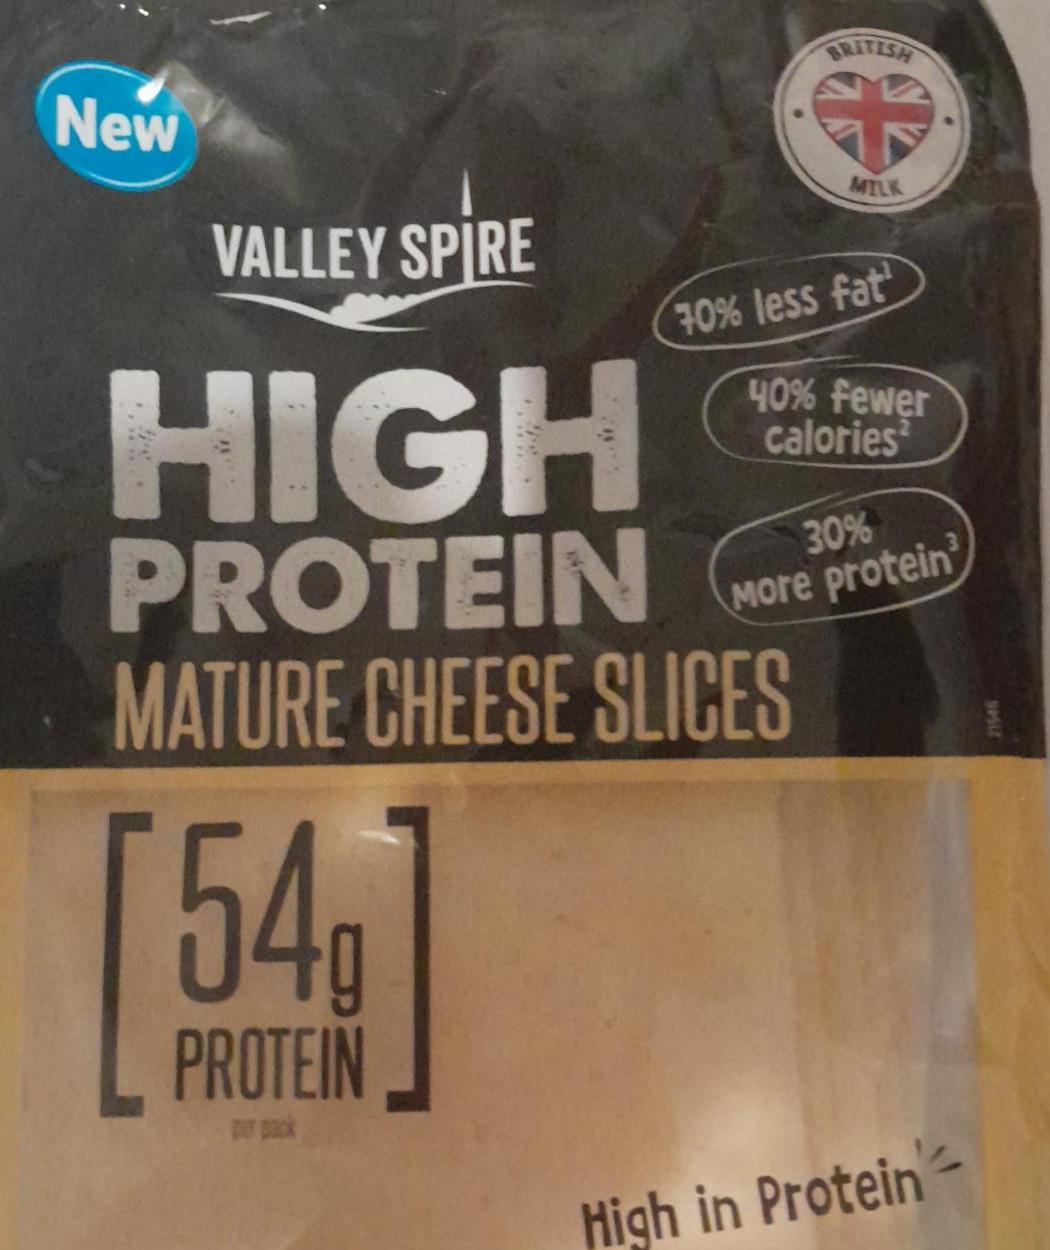 Zdjęcia - High protein mature cheese slices Valley spire